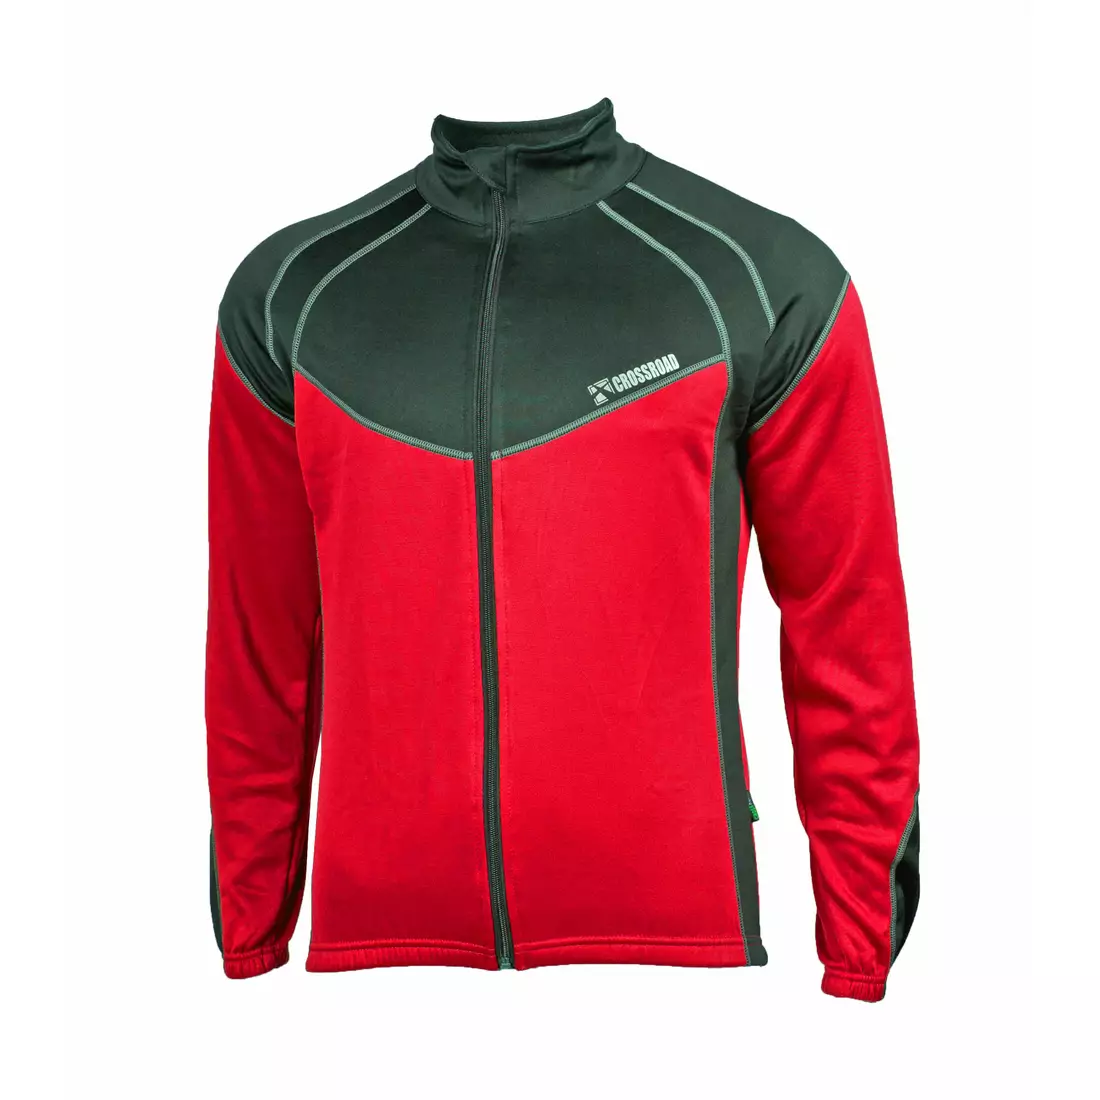 CROSSROAD KENT warm cycling sweatshirt, black and red